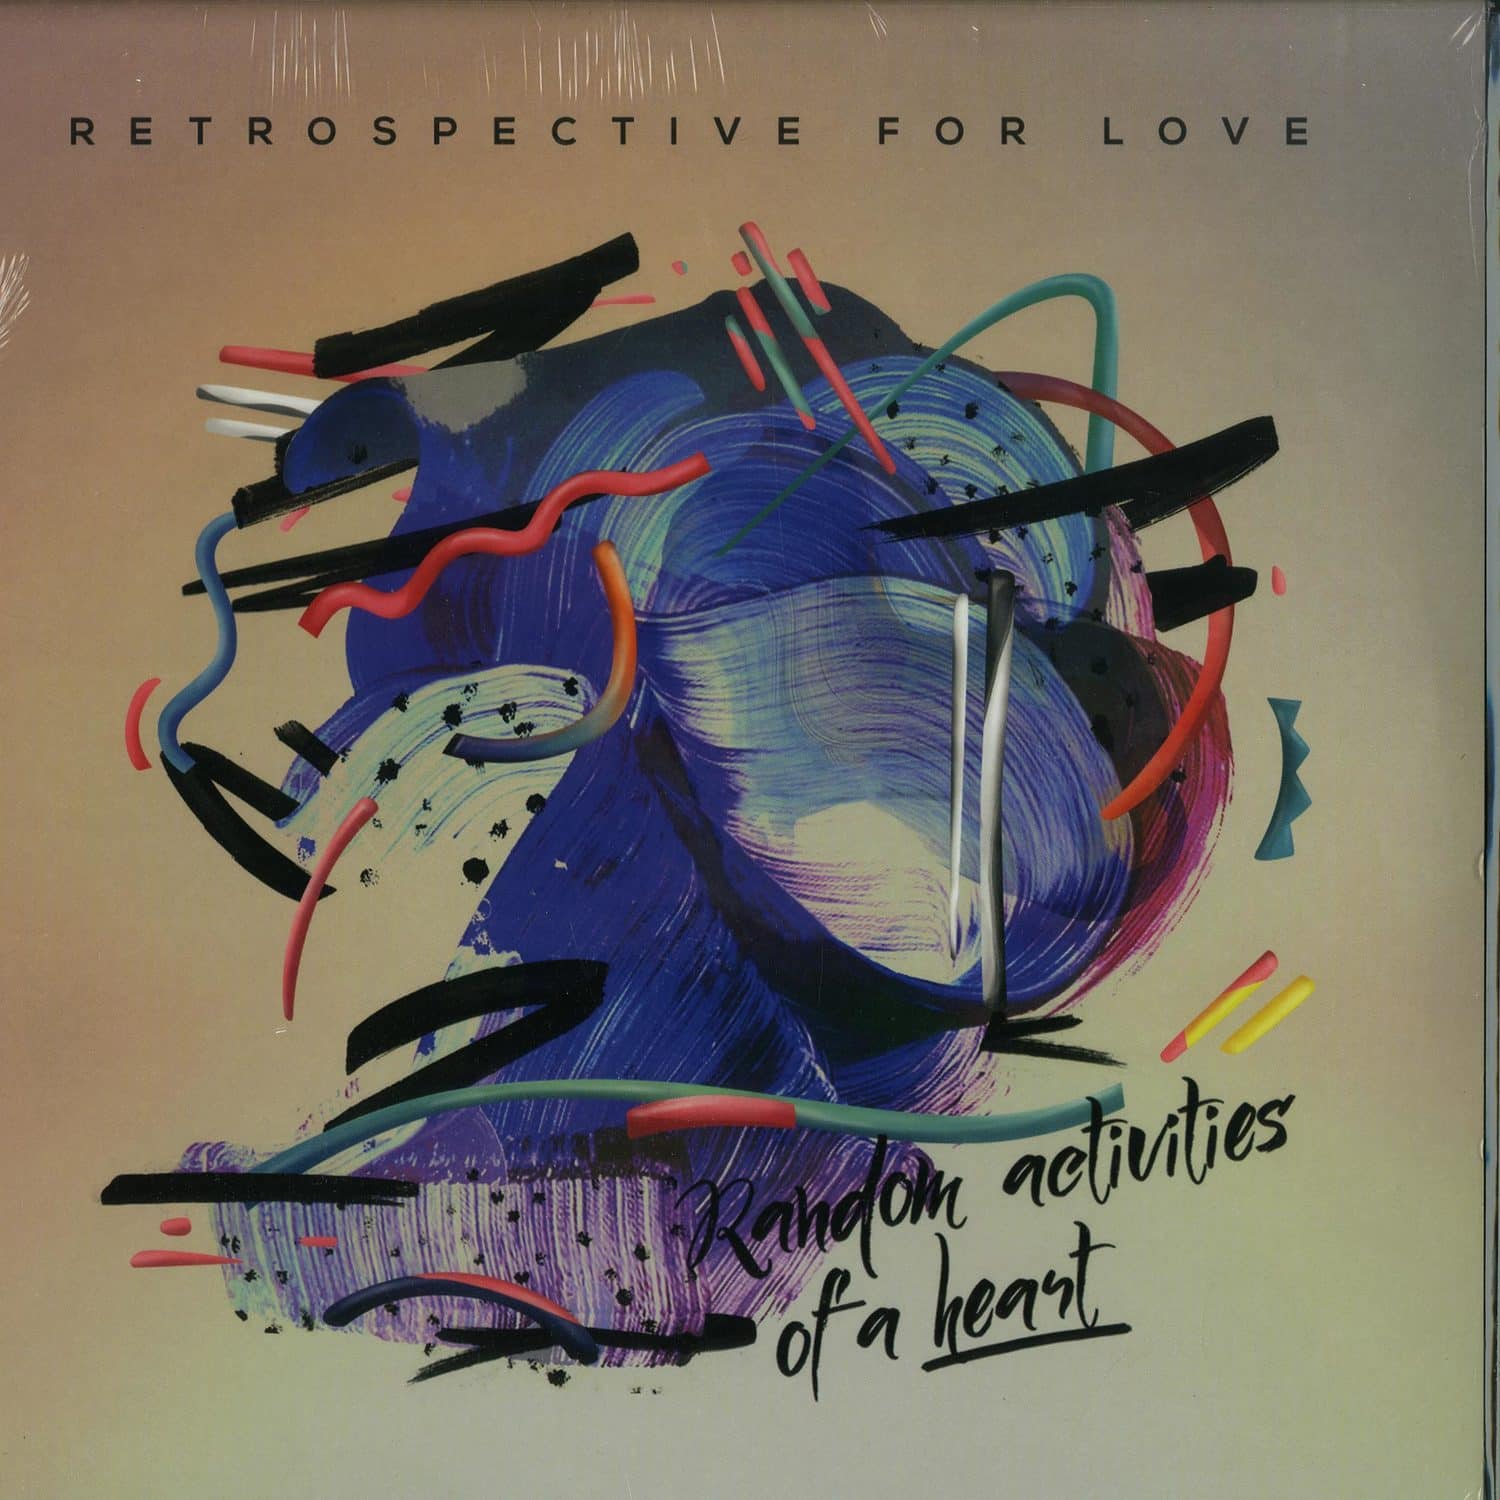 Retrospective For Love - RANDOM ACTIVITIES OF A HEART 